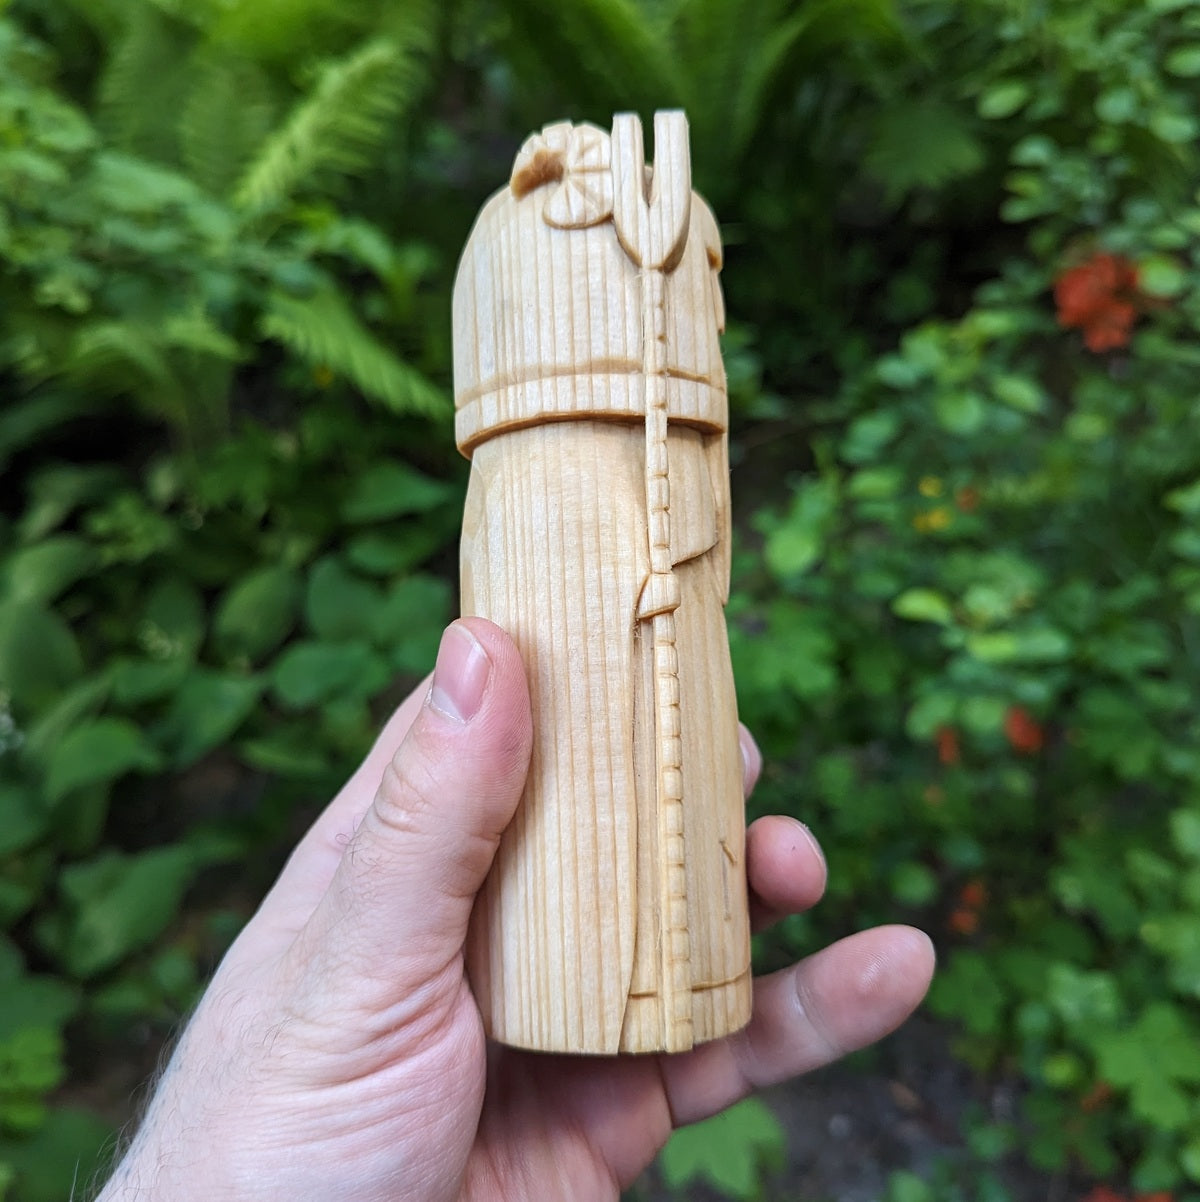 Loki wooden figurine